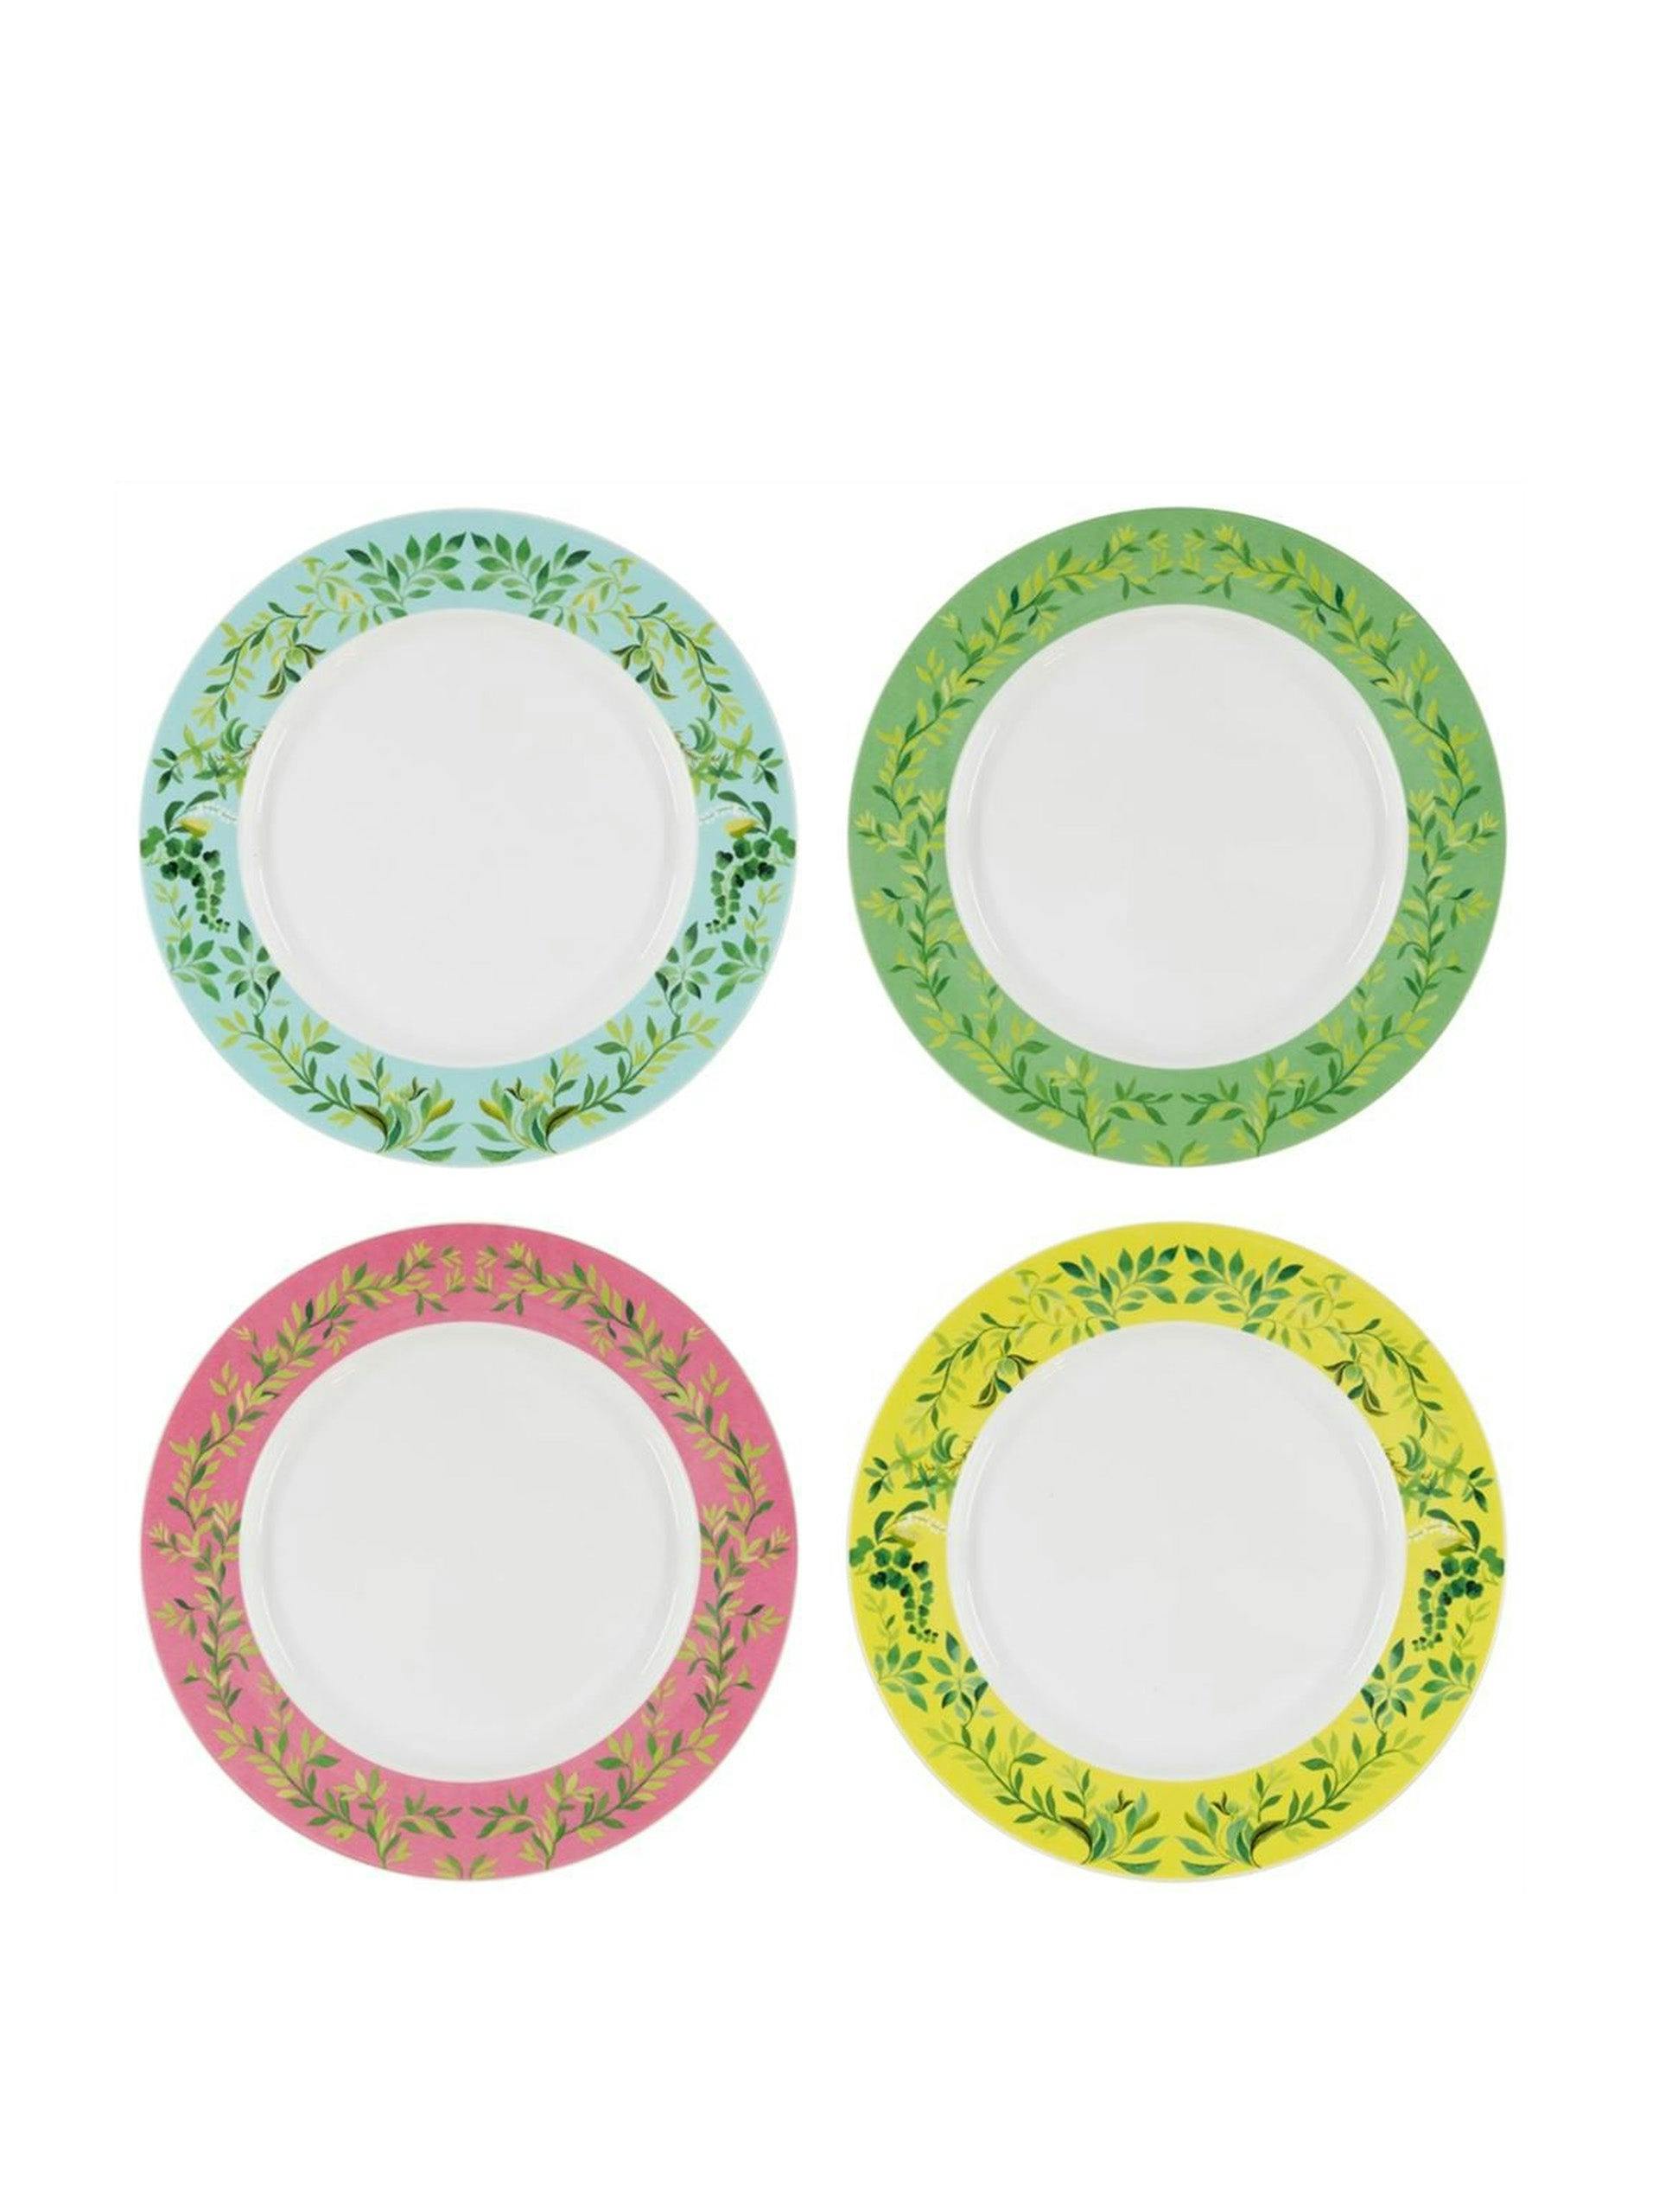 Ikebana damask dinner plates (set of 4)